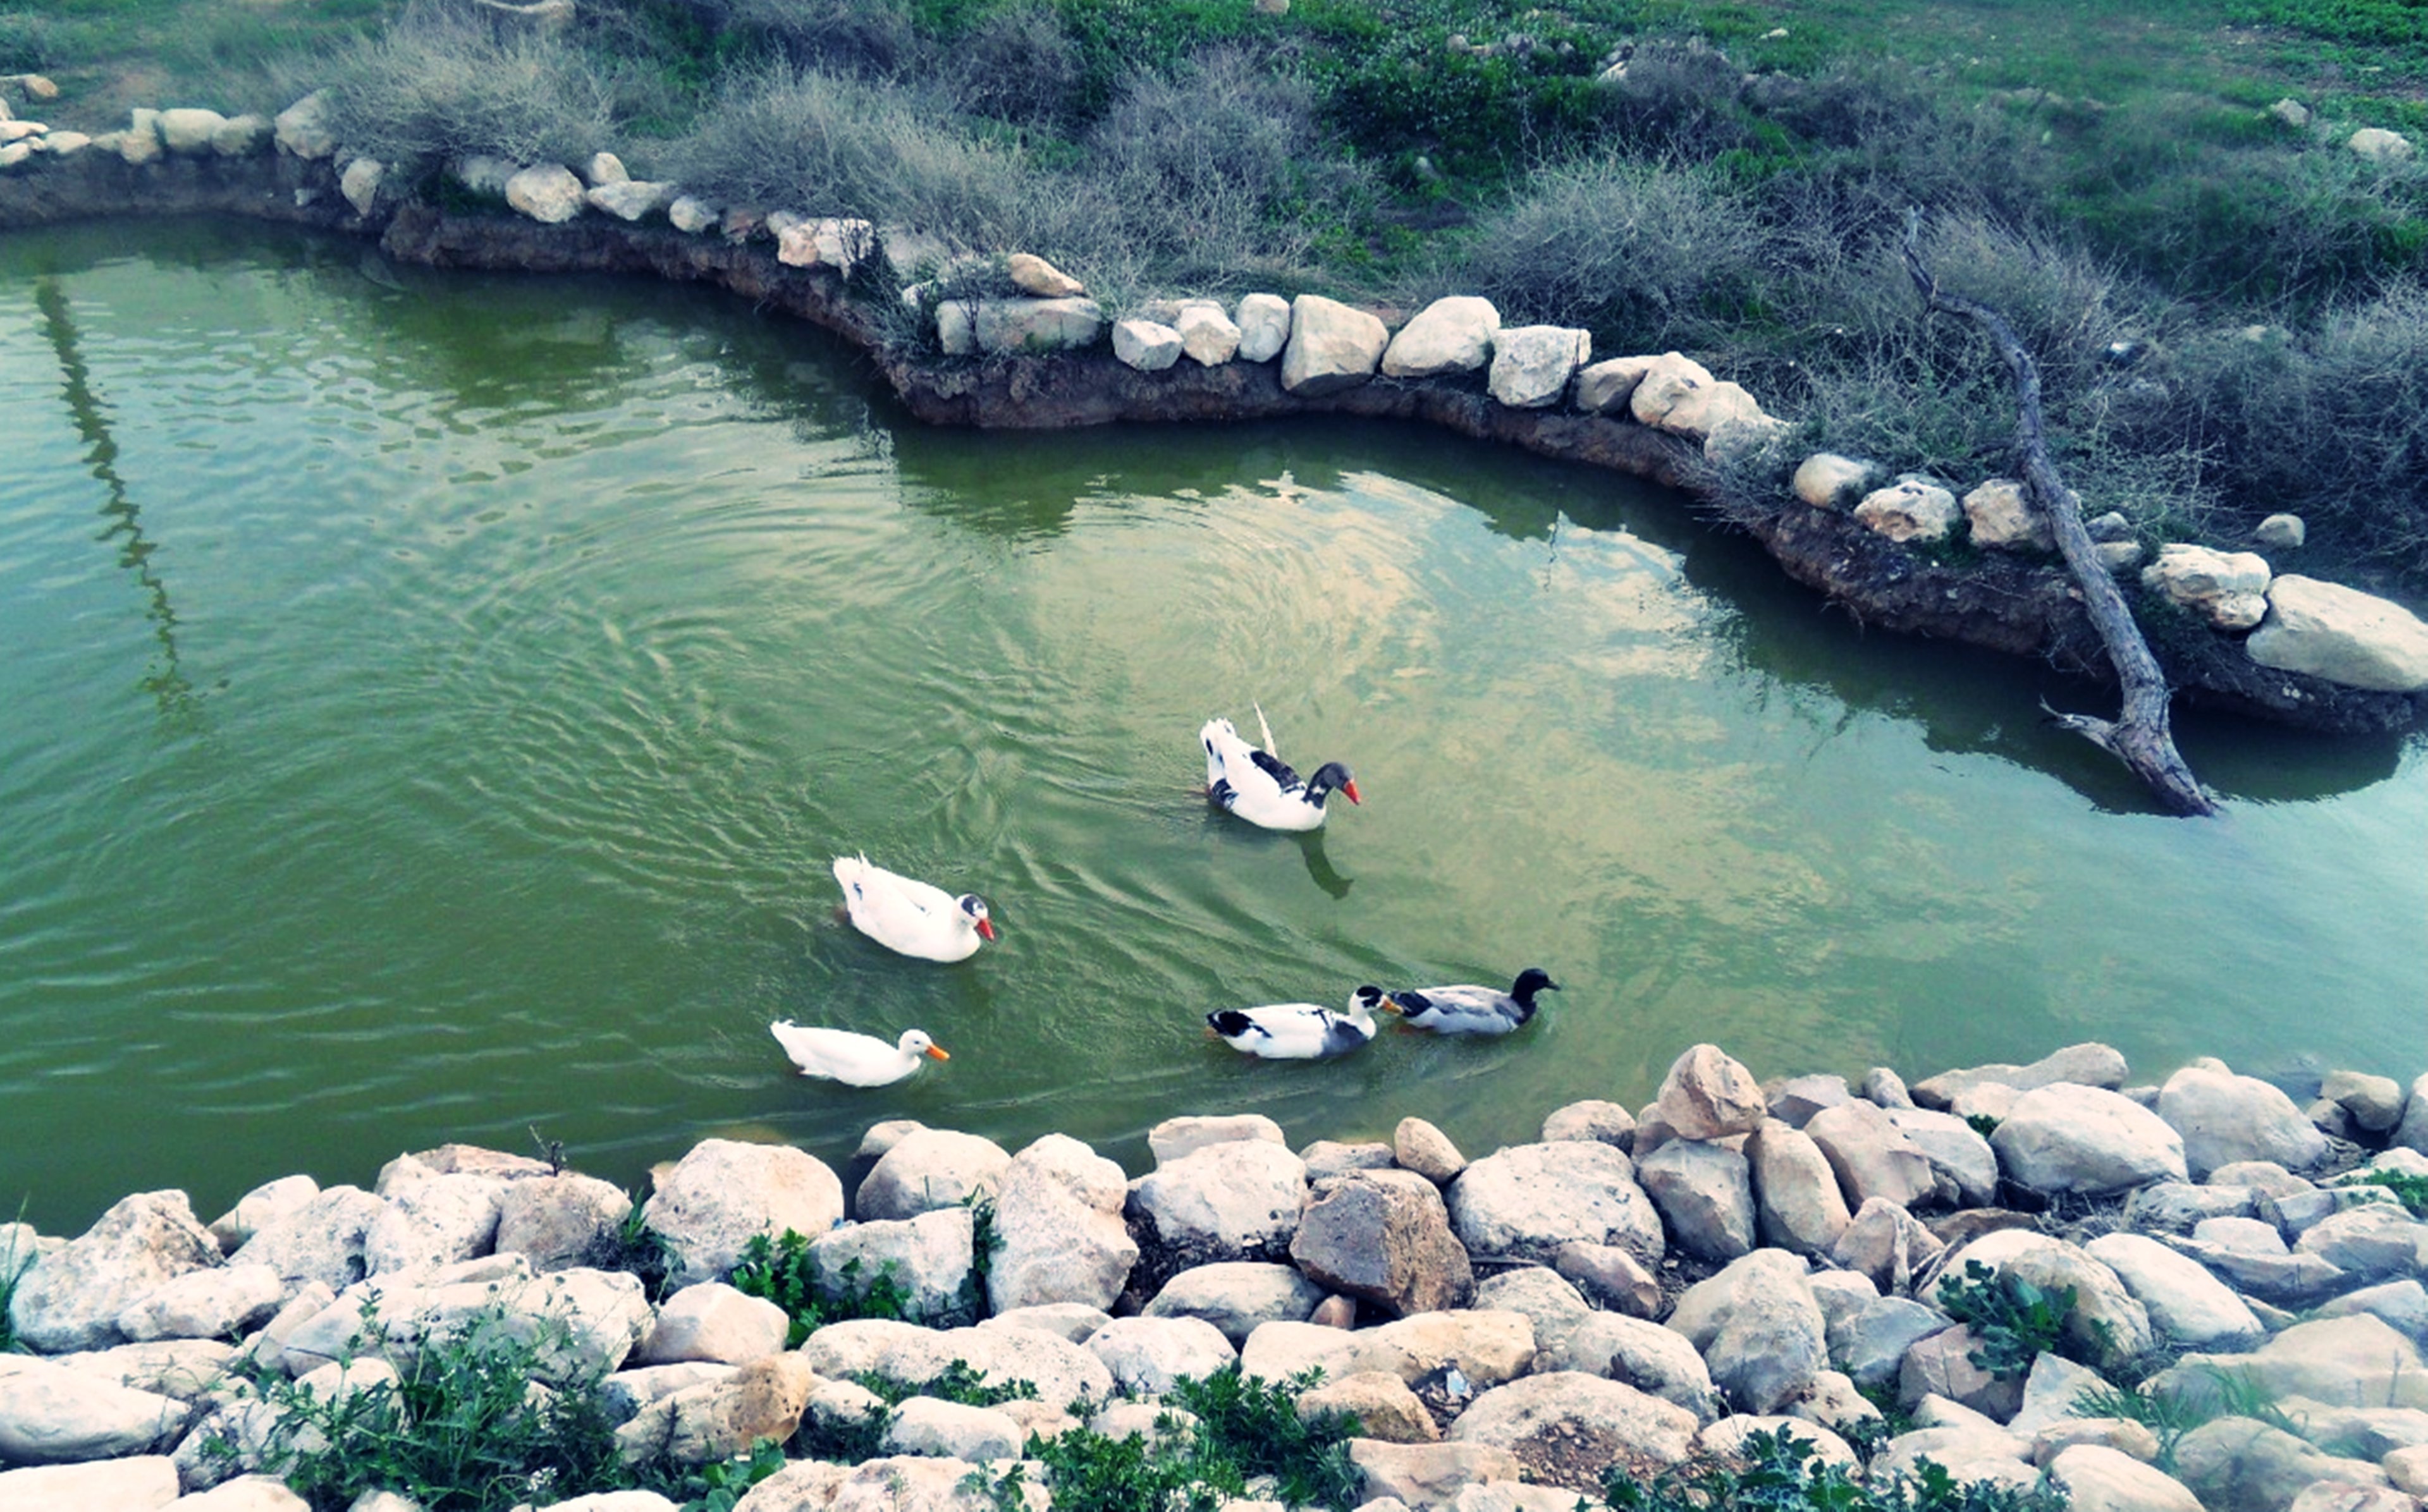 ducks, Birds, Lakes, Gardens, Rocks, Landscapes, Nature, Swim, Fun, Joy, Tebessa, Algeria, Africa Wallpaper